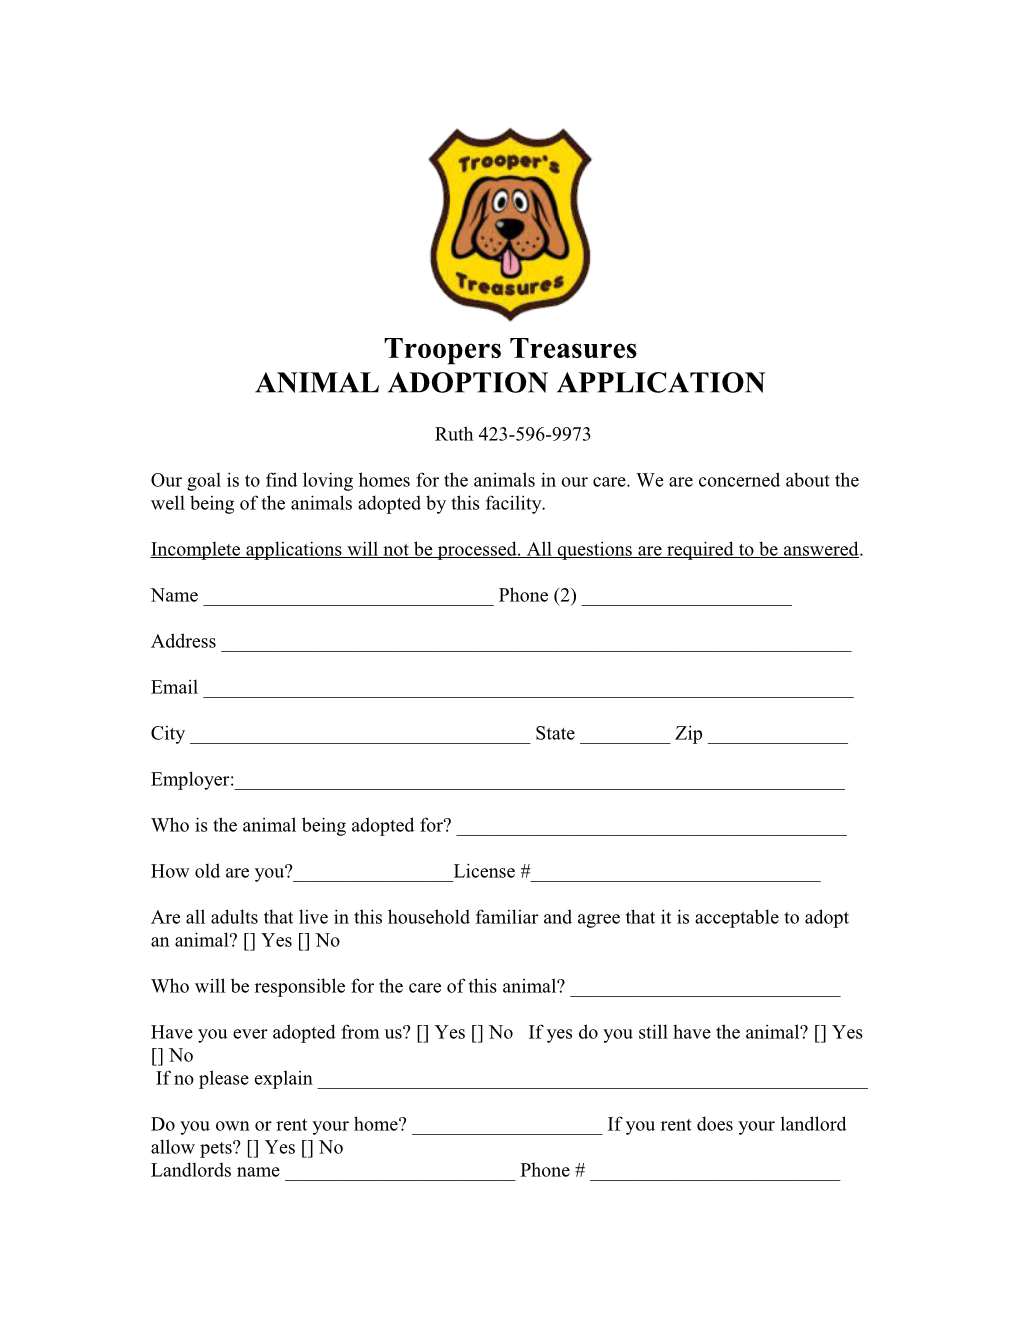 Animal Adoption Application